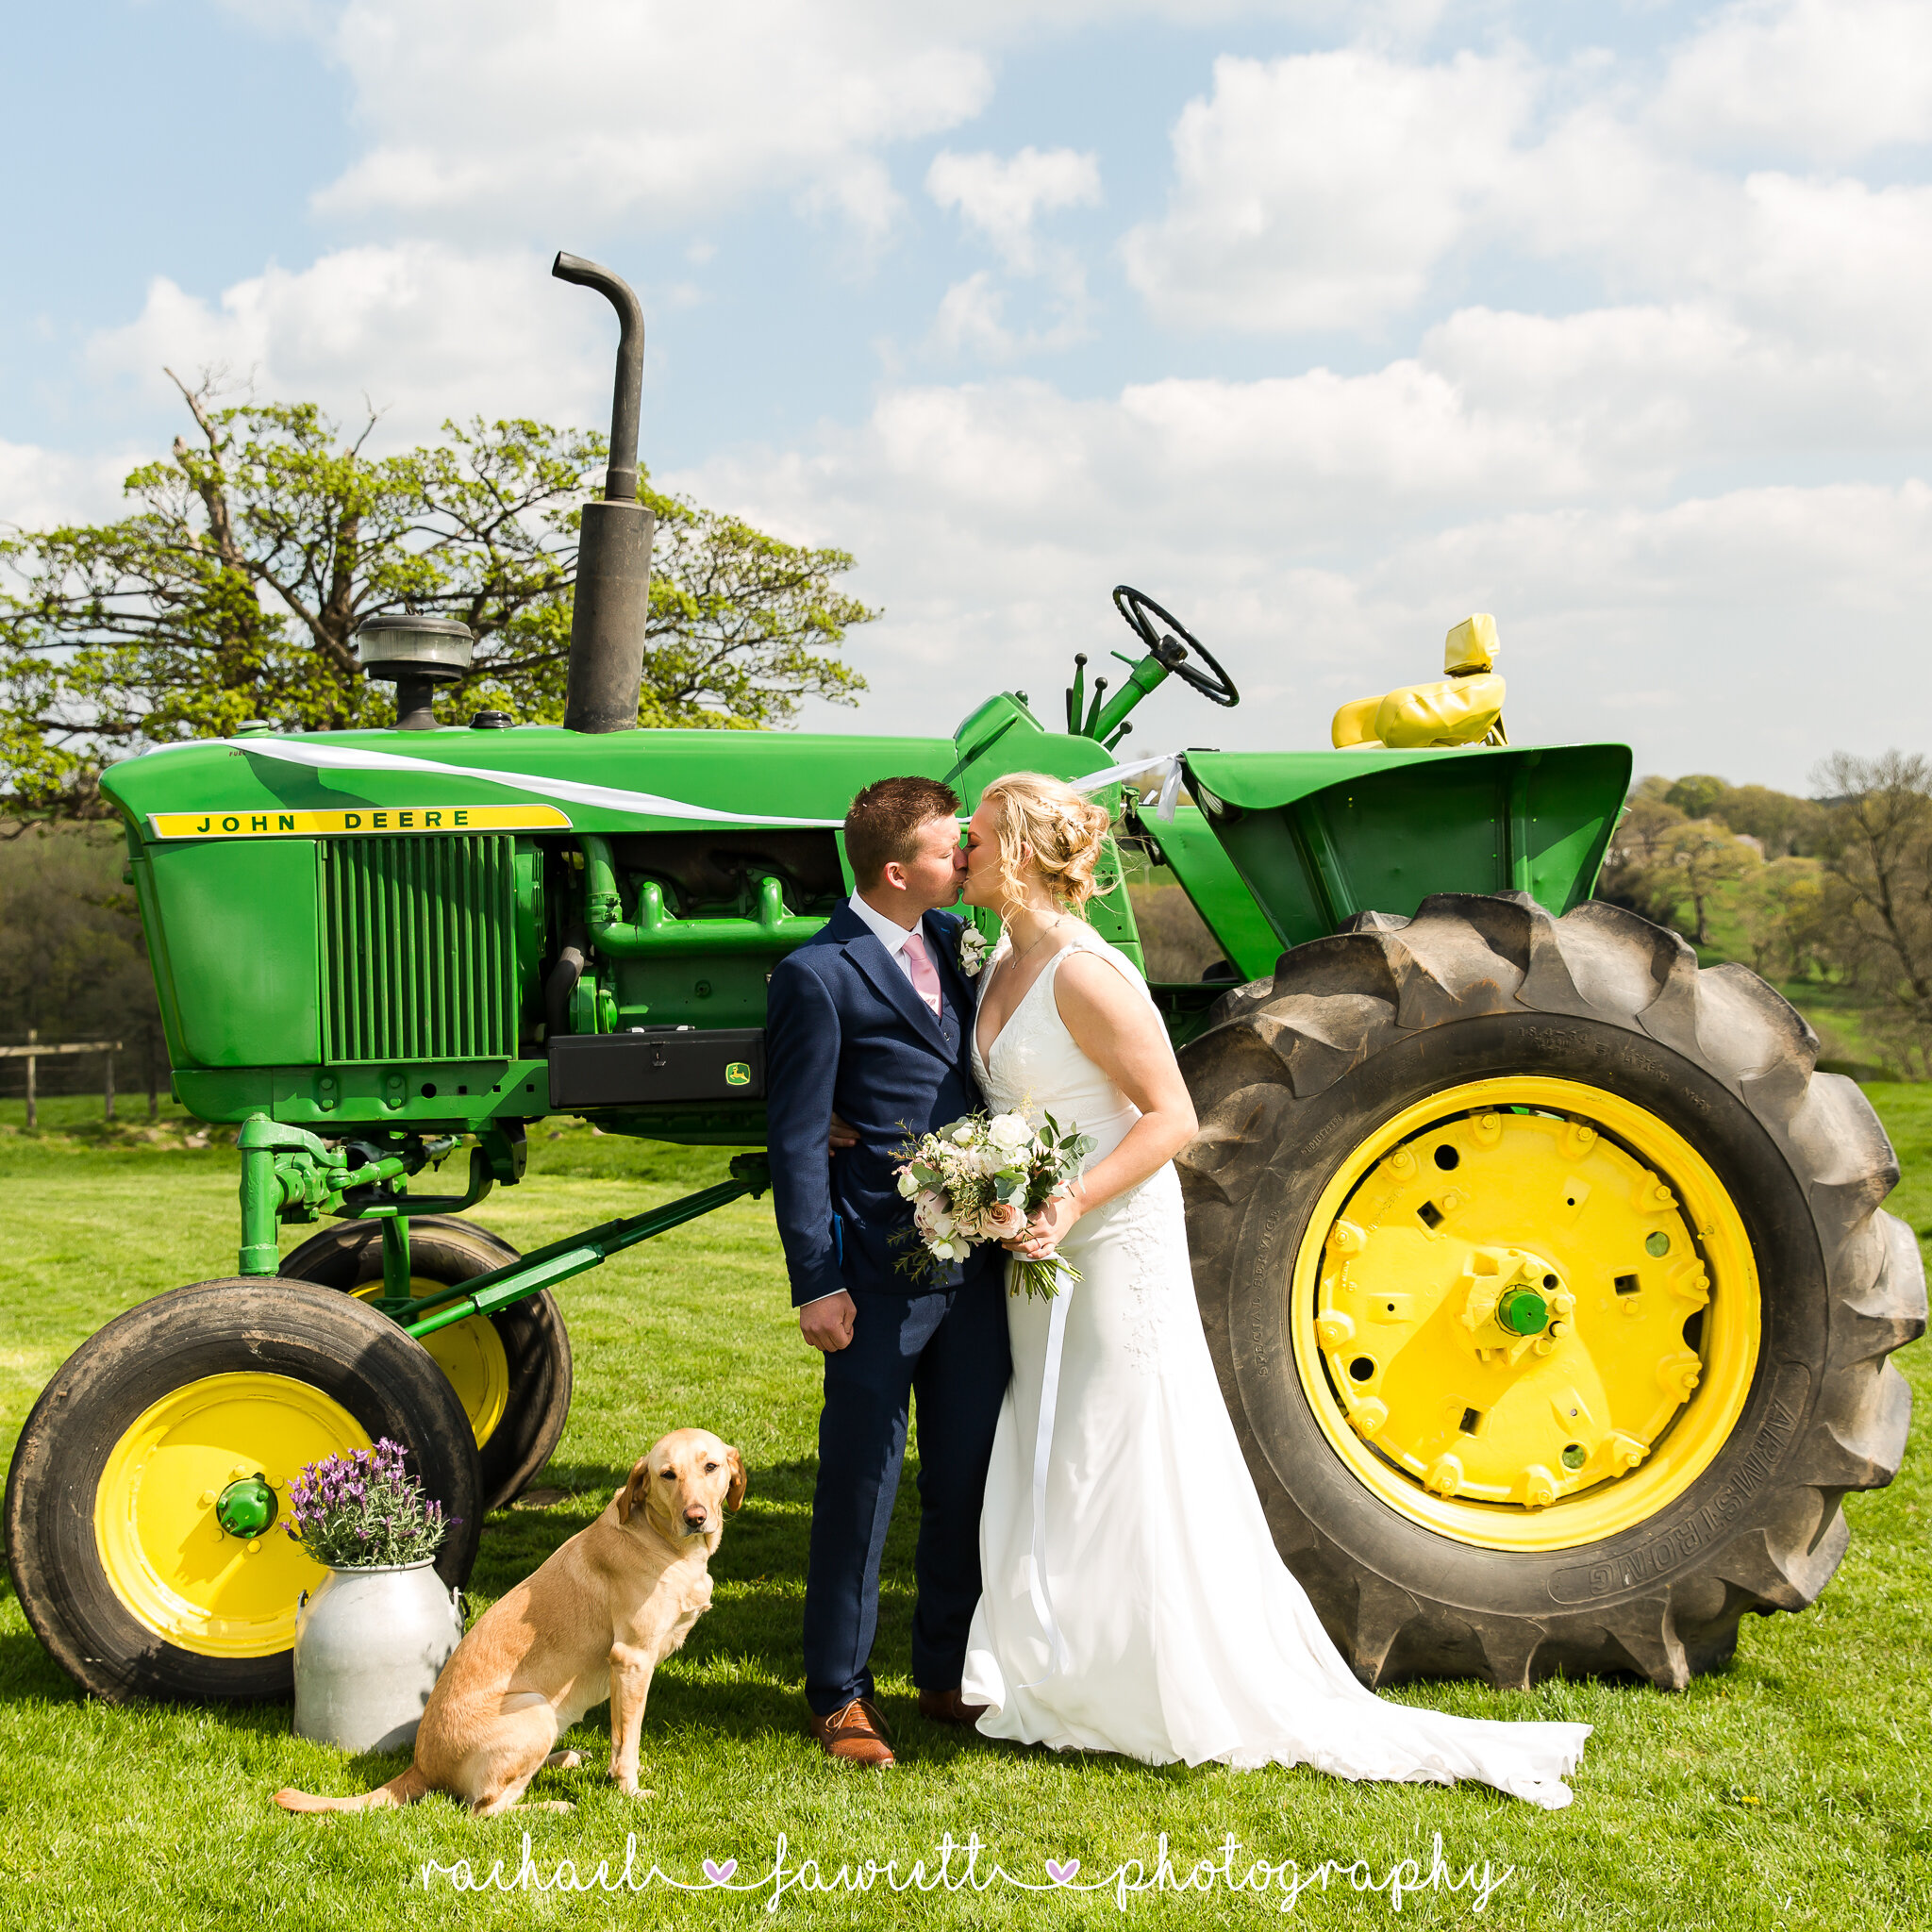 Happy 1st Anniversary Sam and Steph 💘💘

#harrogateweddingphotographer #weddingphotographerharrogate #farmwedding #harrogatephotographer #yorkshiredaleswedding #thirskweddingphotographer